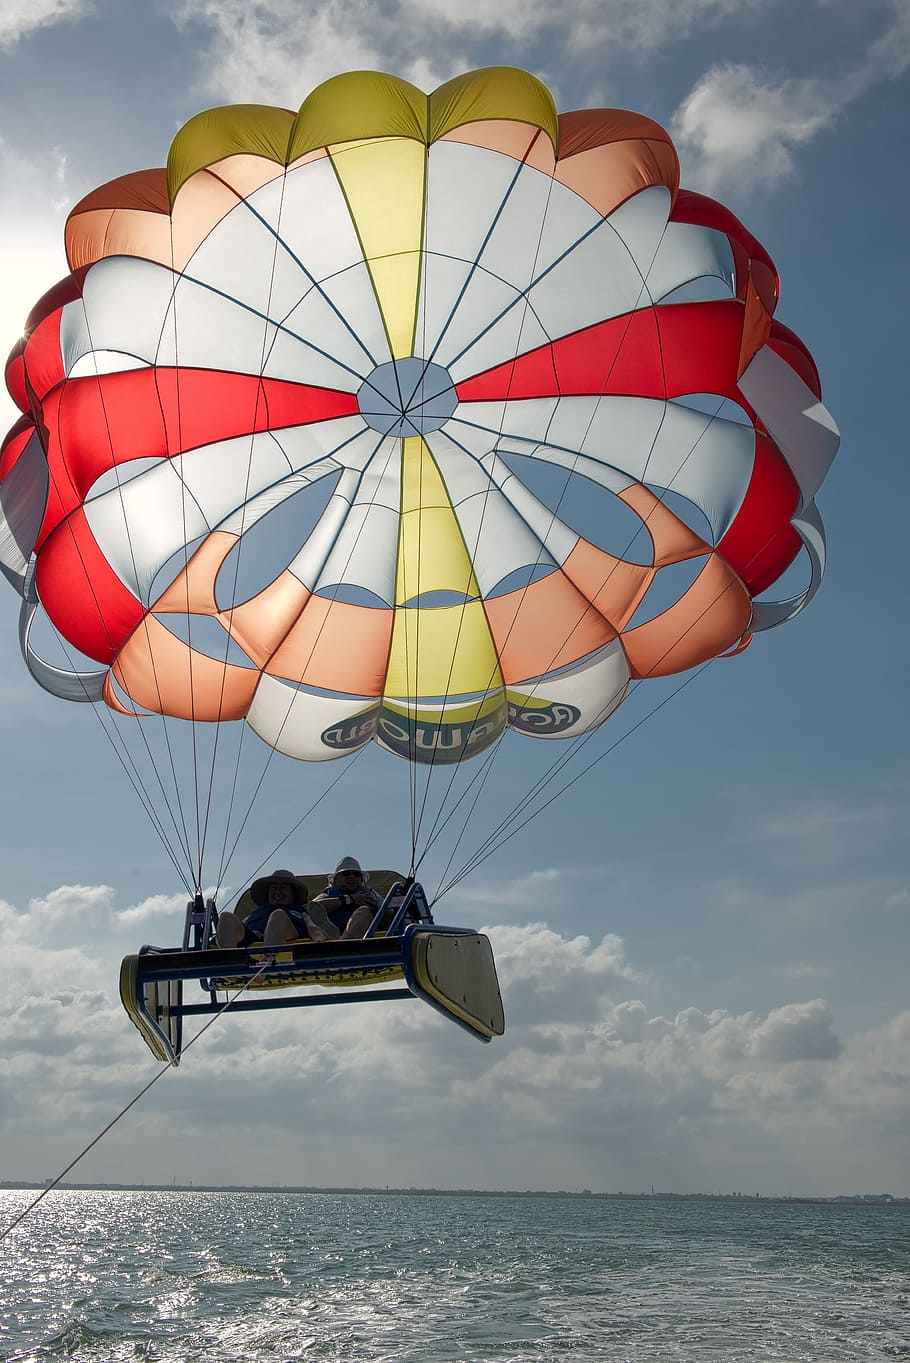 Parasol, Parachute, Sky, activities, summer, sea, challenge, skydiver, skydiving, adventure